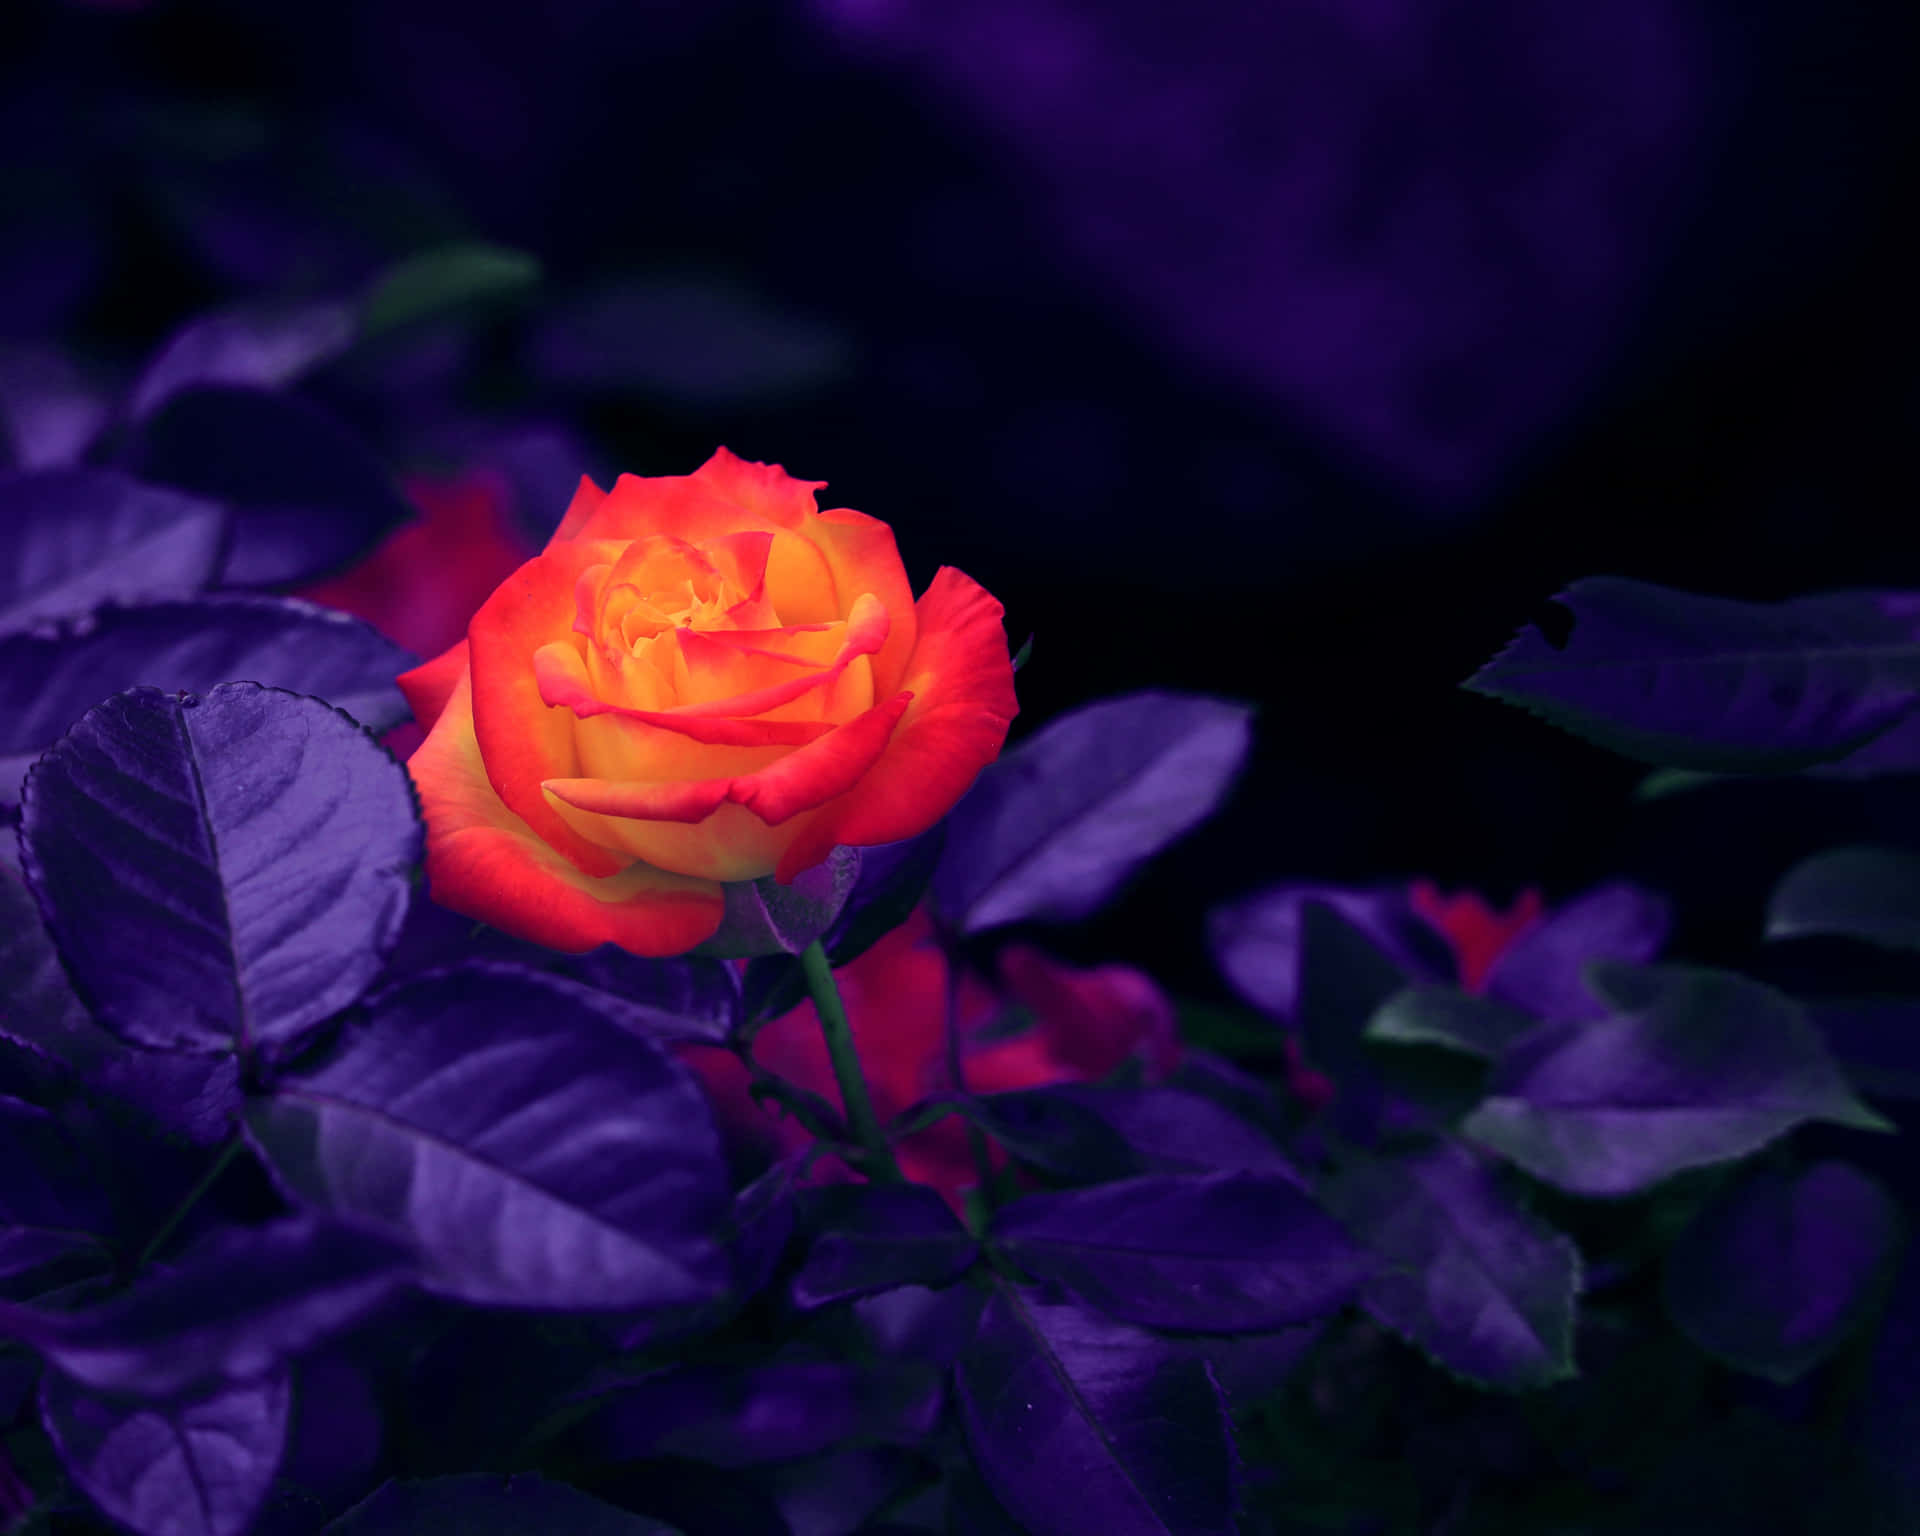 A Rose In Purple And Orange